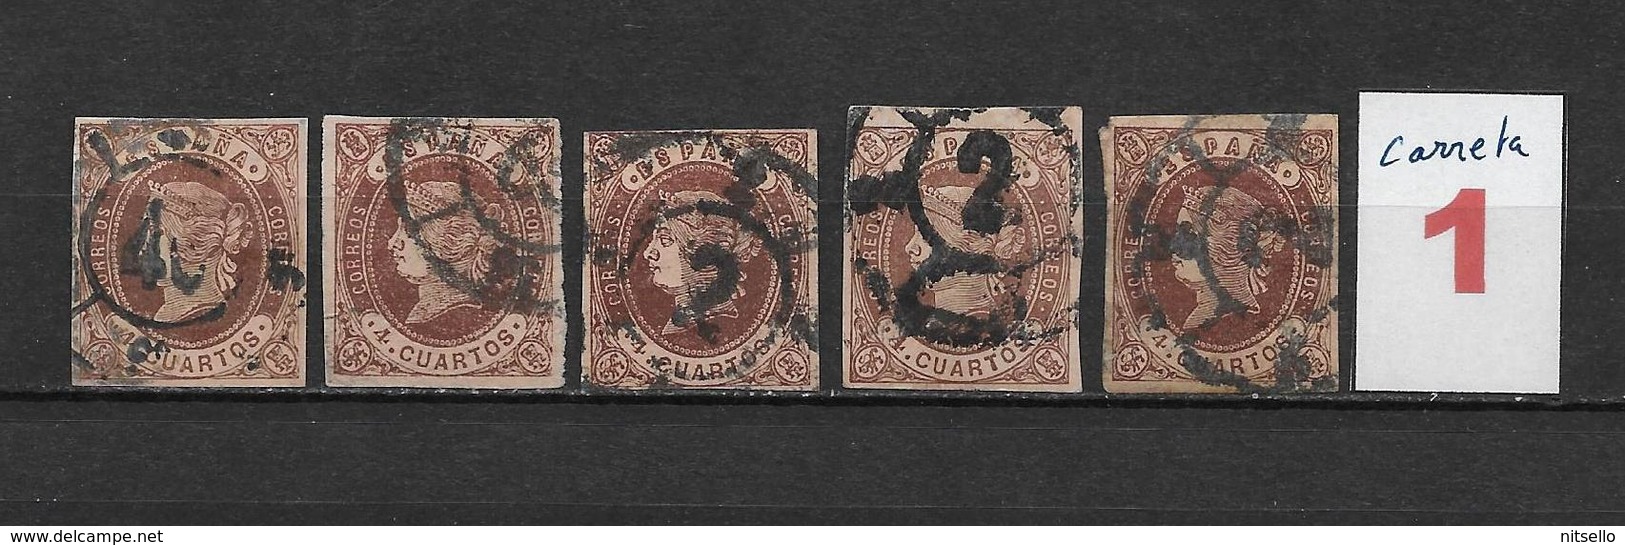 LOTE 1811 /// (C020) ESPAÑA  AÑO 1862   - EDIFIL Nº: 58  RUEDA DE CARRETA  ¡¡¡ OFERTA !!! - Used Stamps